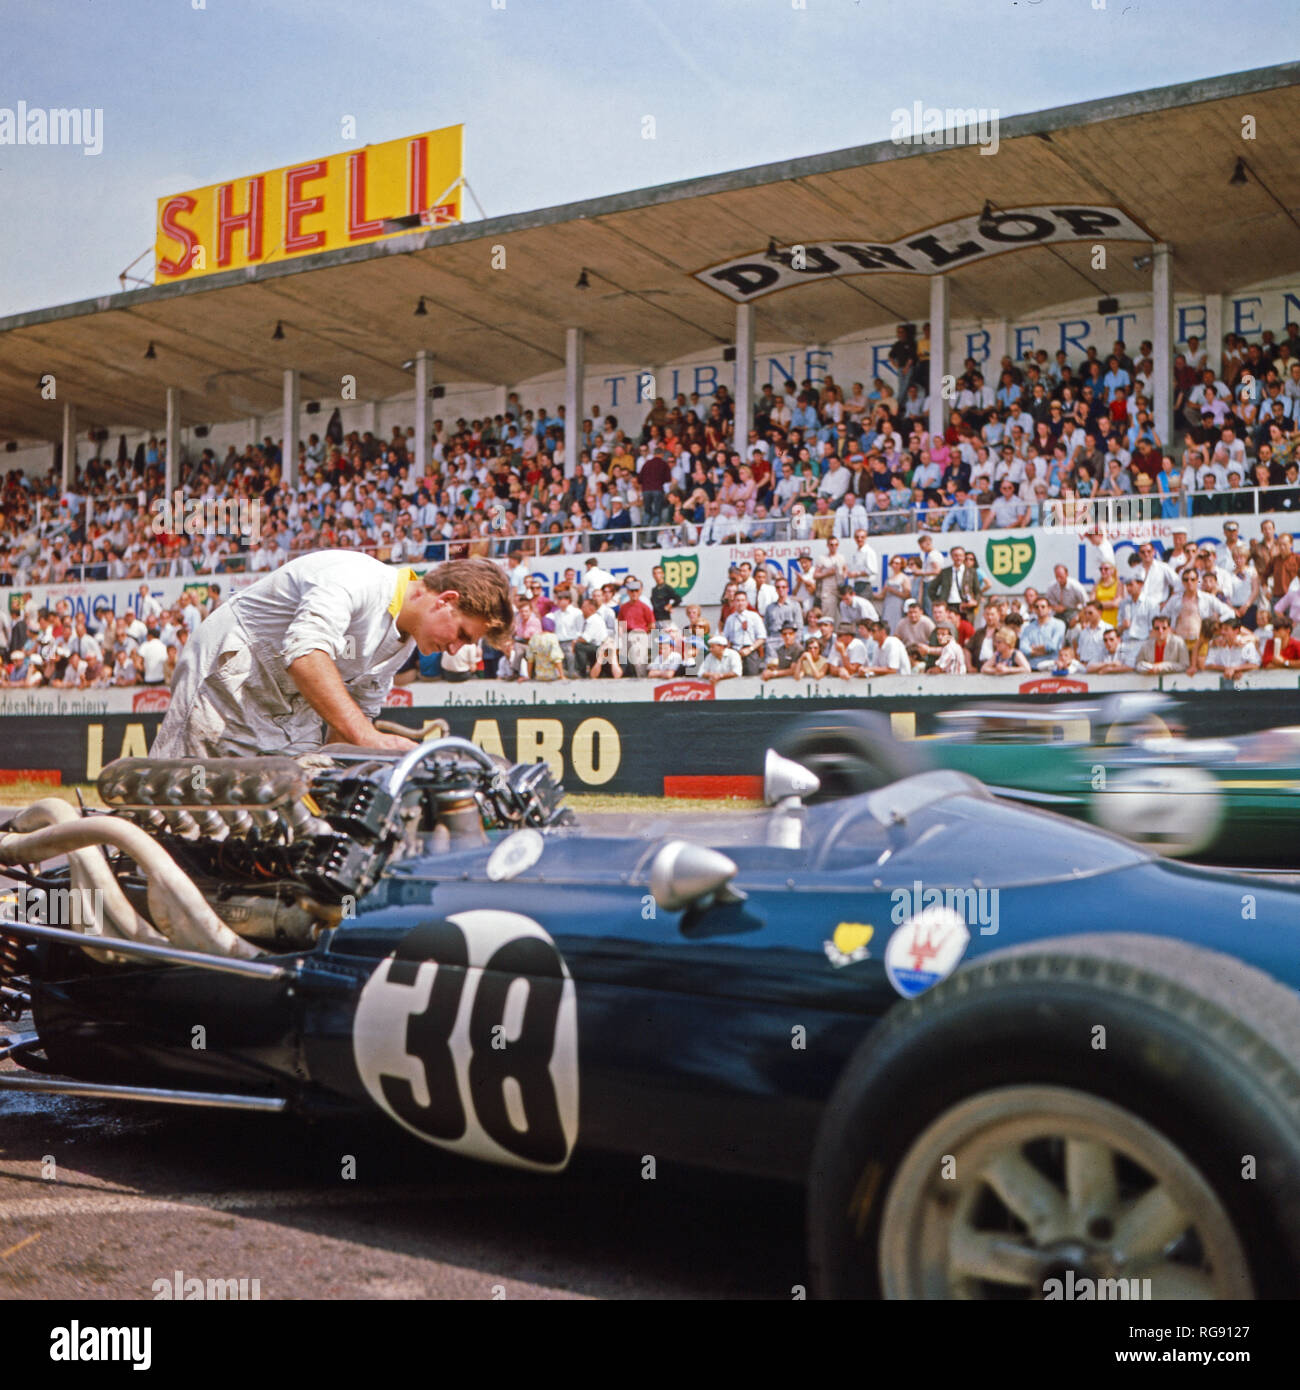 Der Wagen des Schweizer Rennfahrers Joseph Siffert hat einen Ausfall, ca. 1966. La vettura della Swiss racing driver Joseph Siffert al pit-stop, ca. 1966. Foto Stock